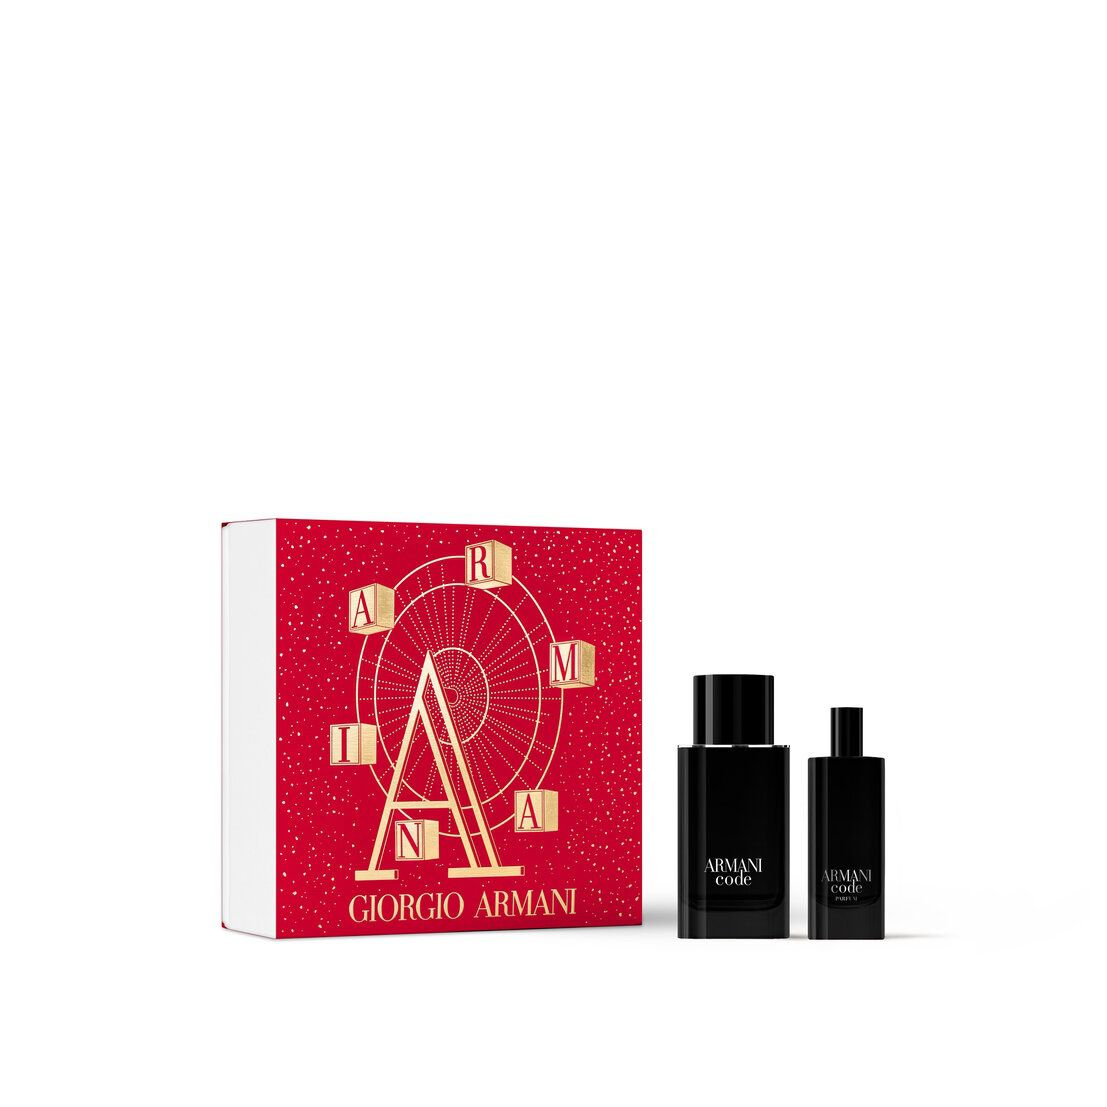 New  Armani Code Parfum 1 piece $144 value 